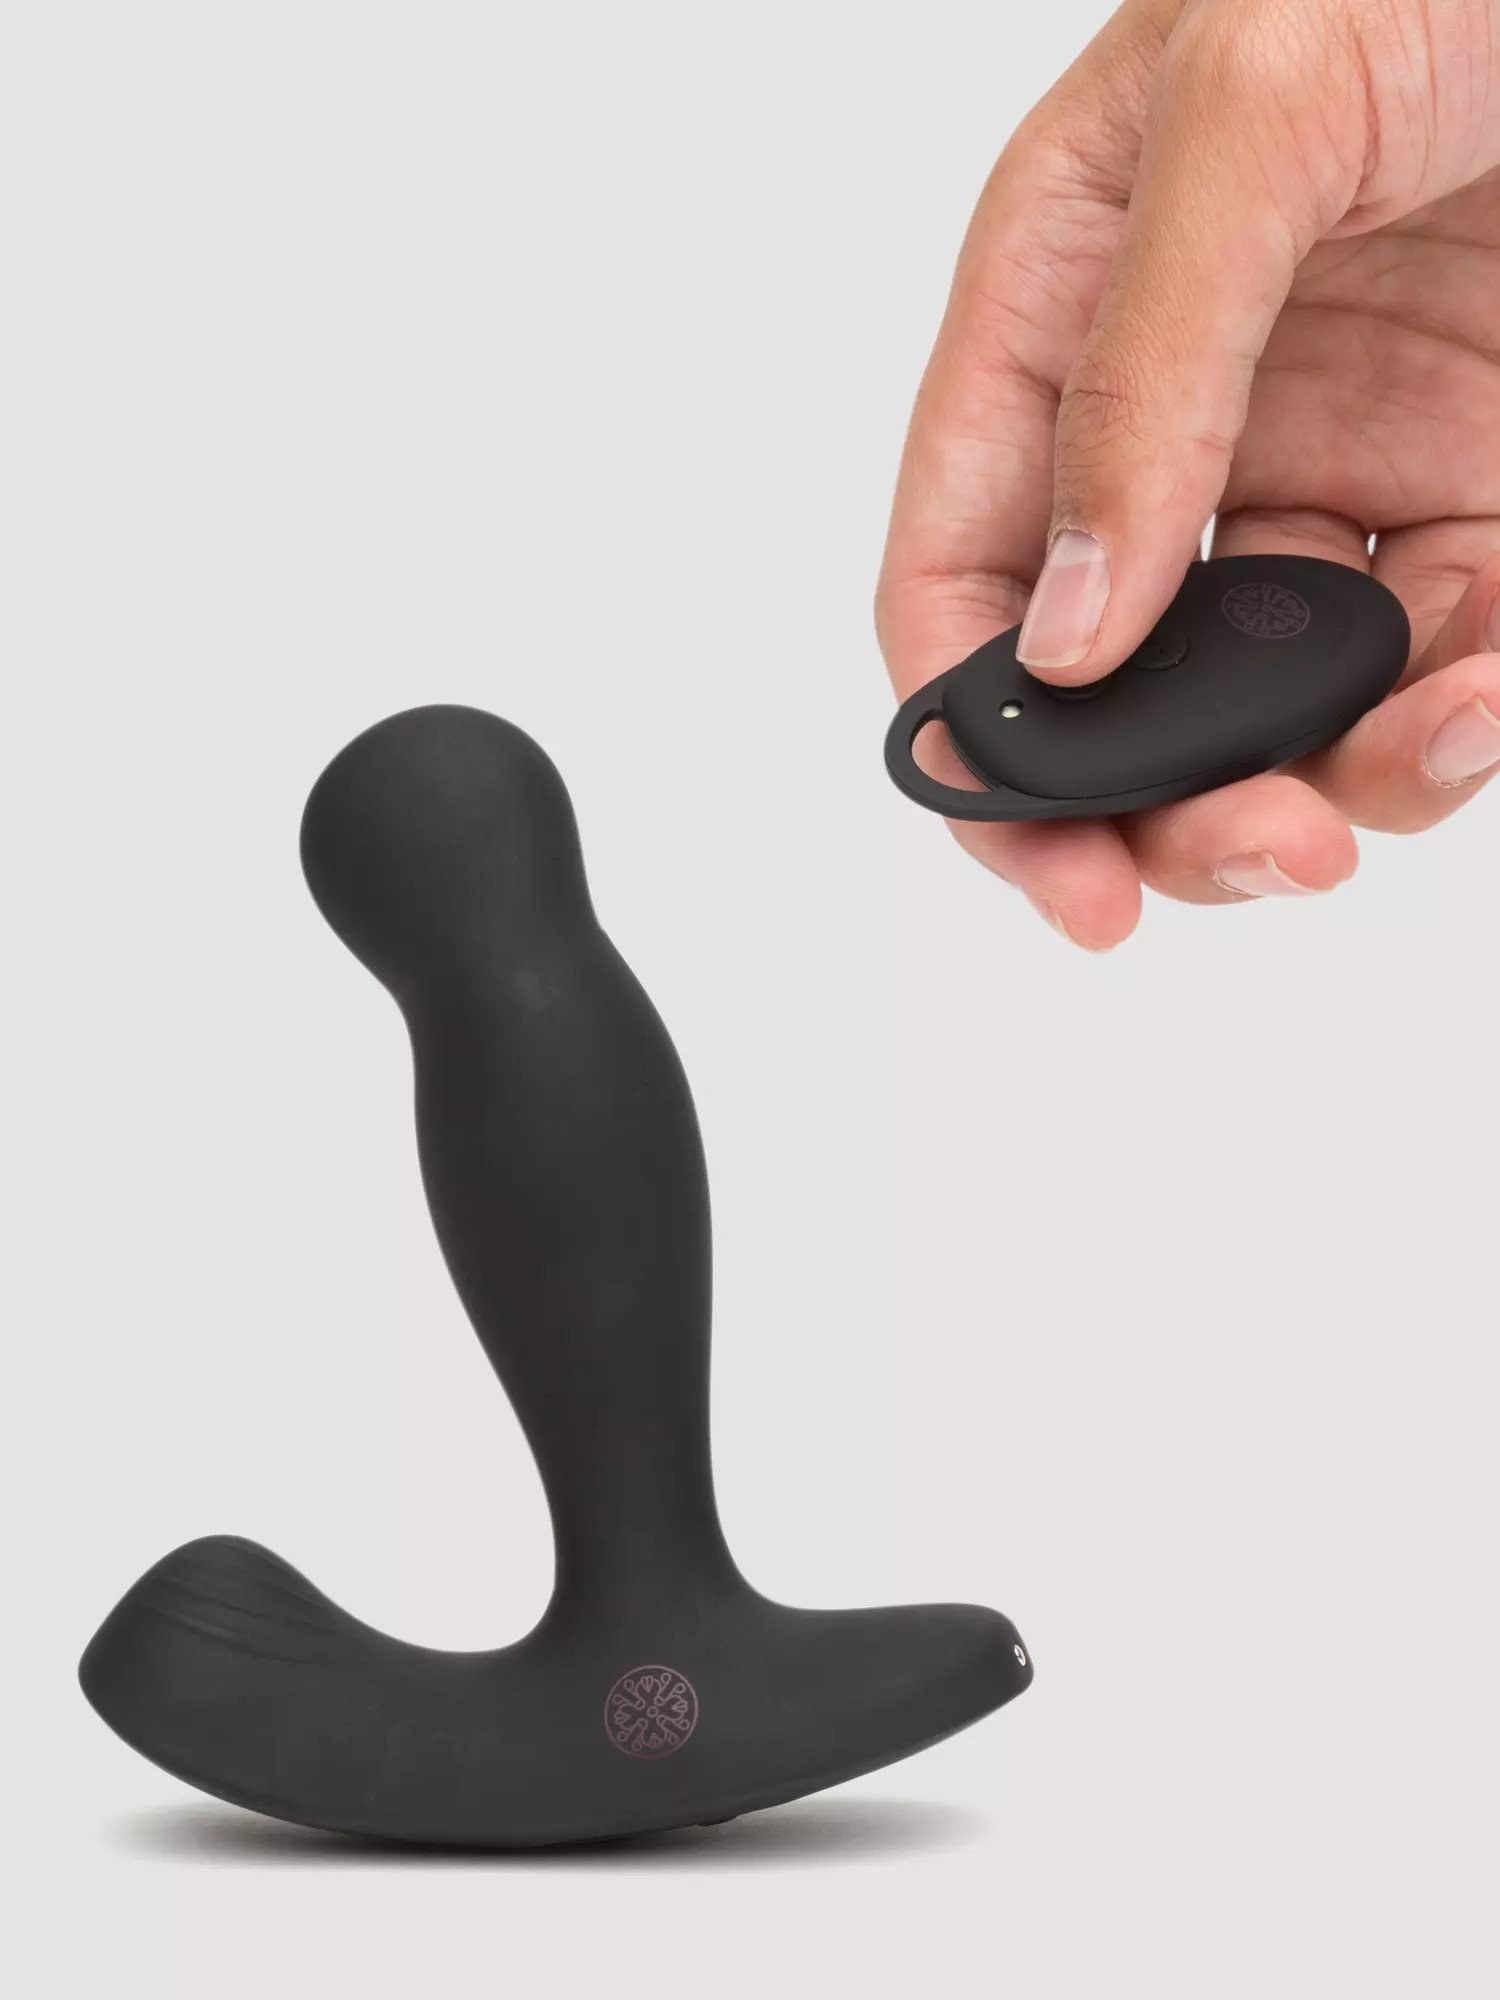 Black prostate plug and hand holding black wireless remote